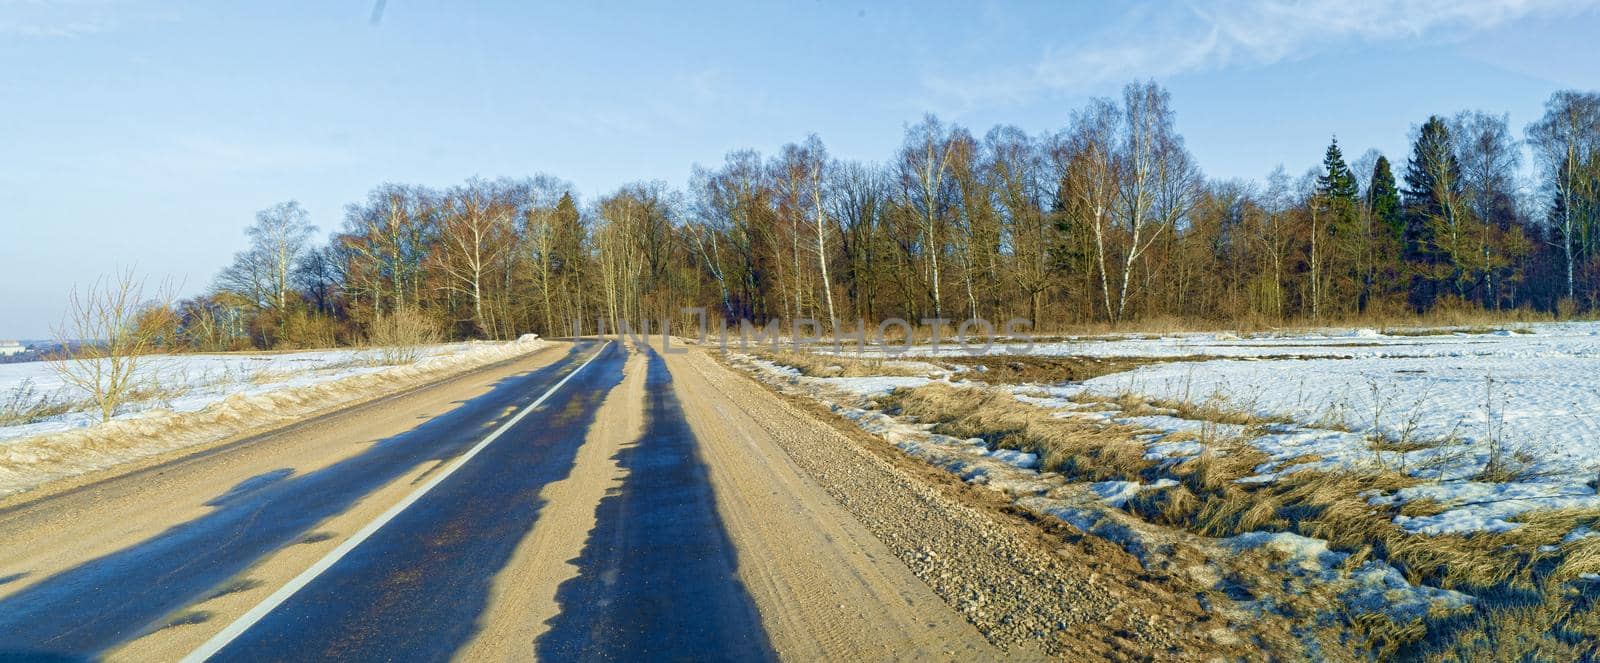 Asphalt road in early spring near the forest. by kolesnikov_studio